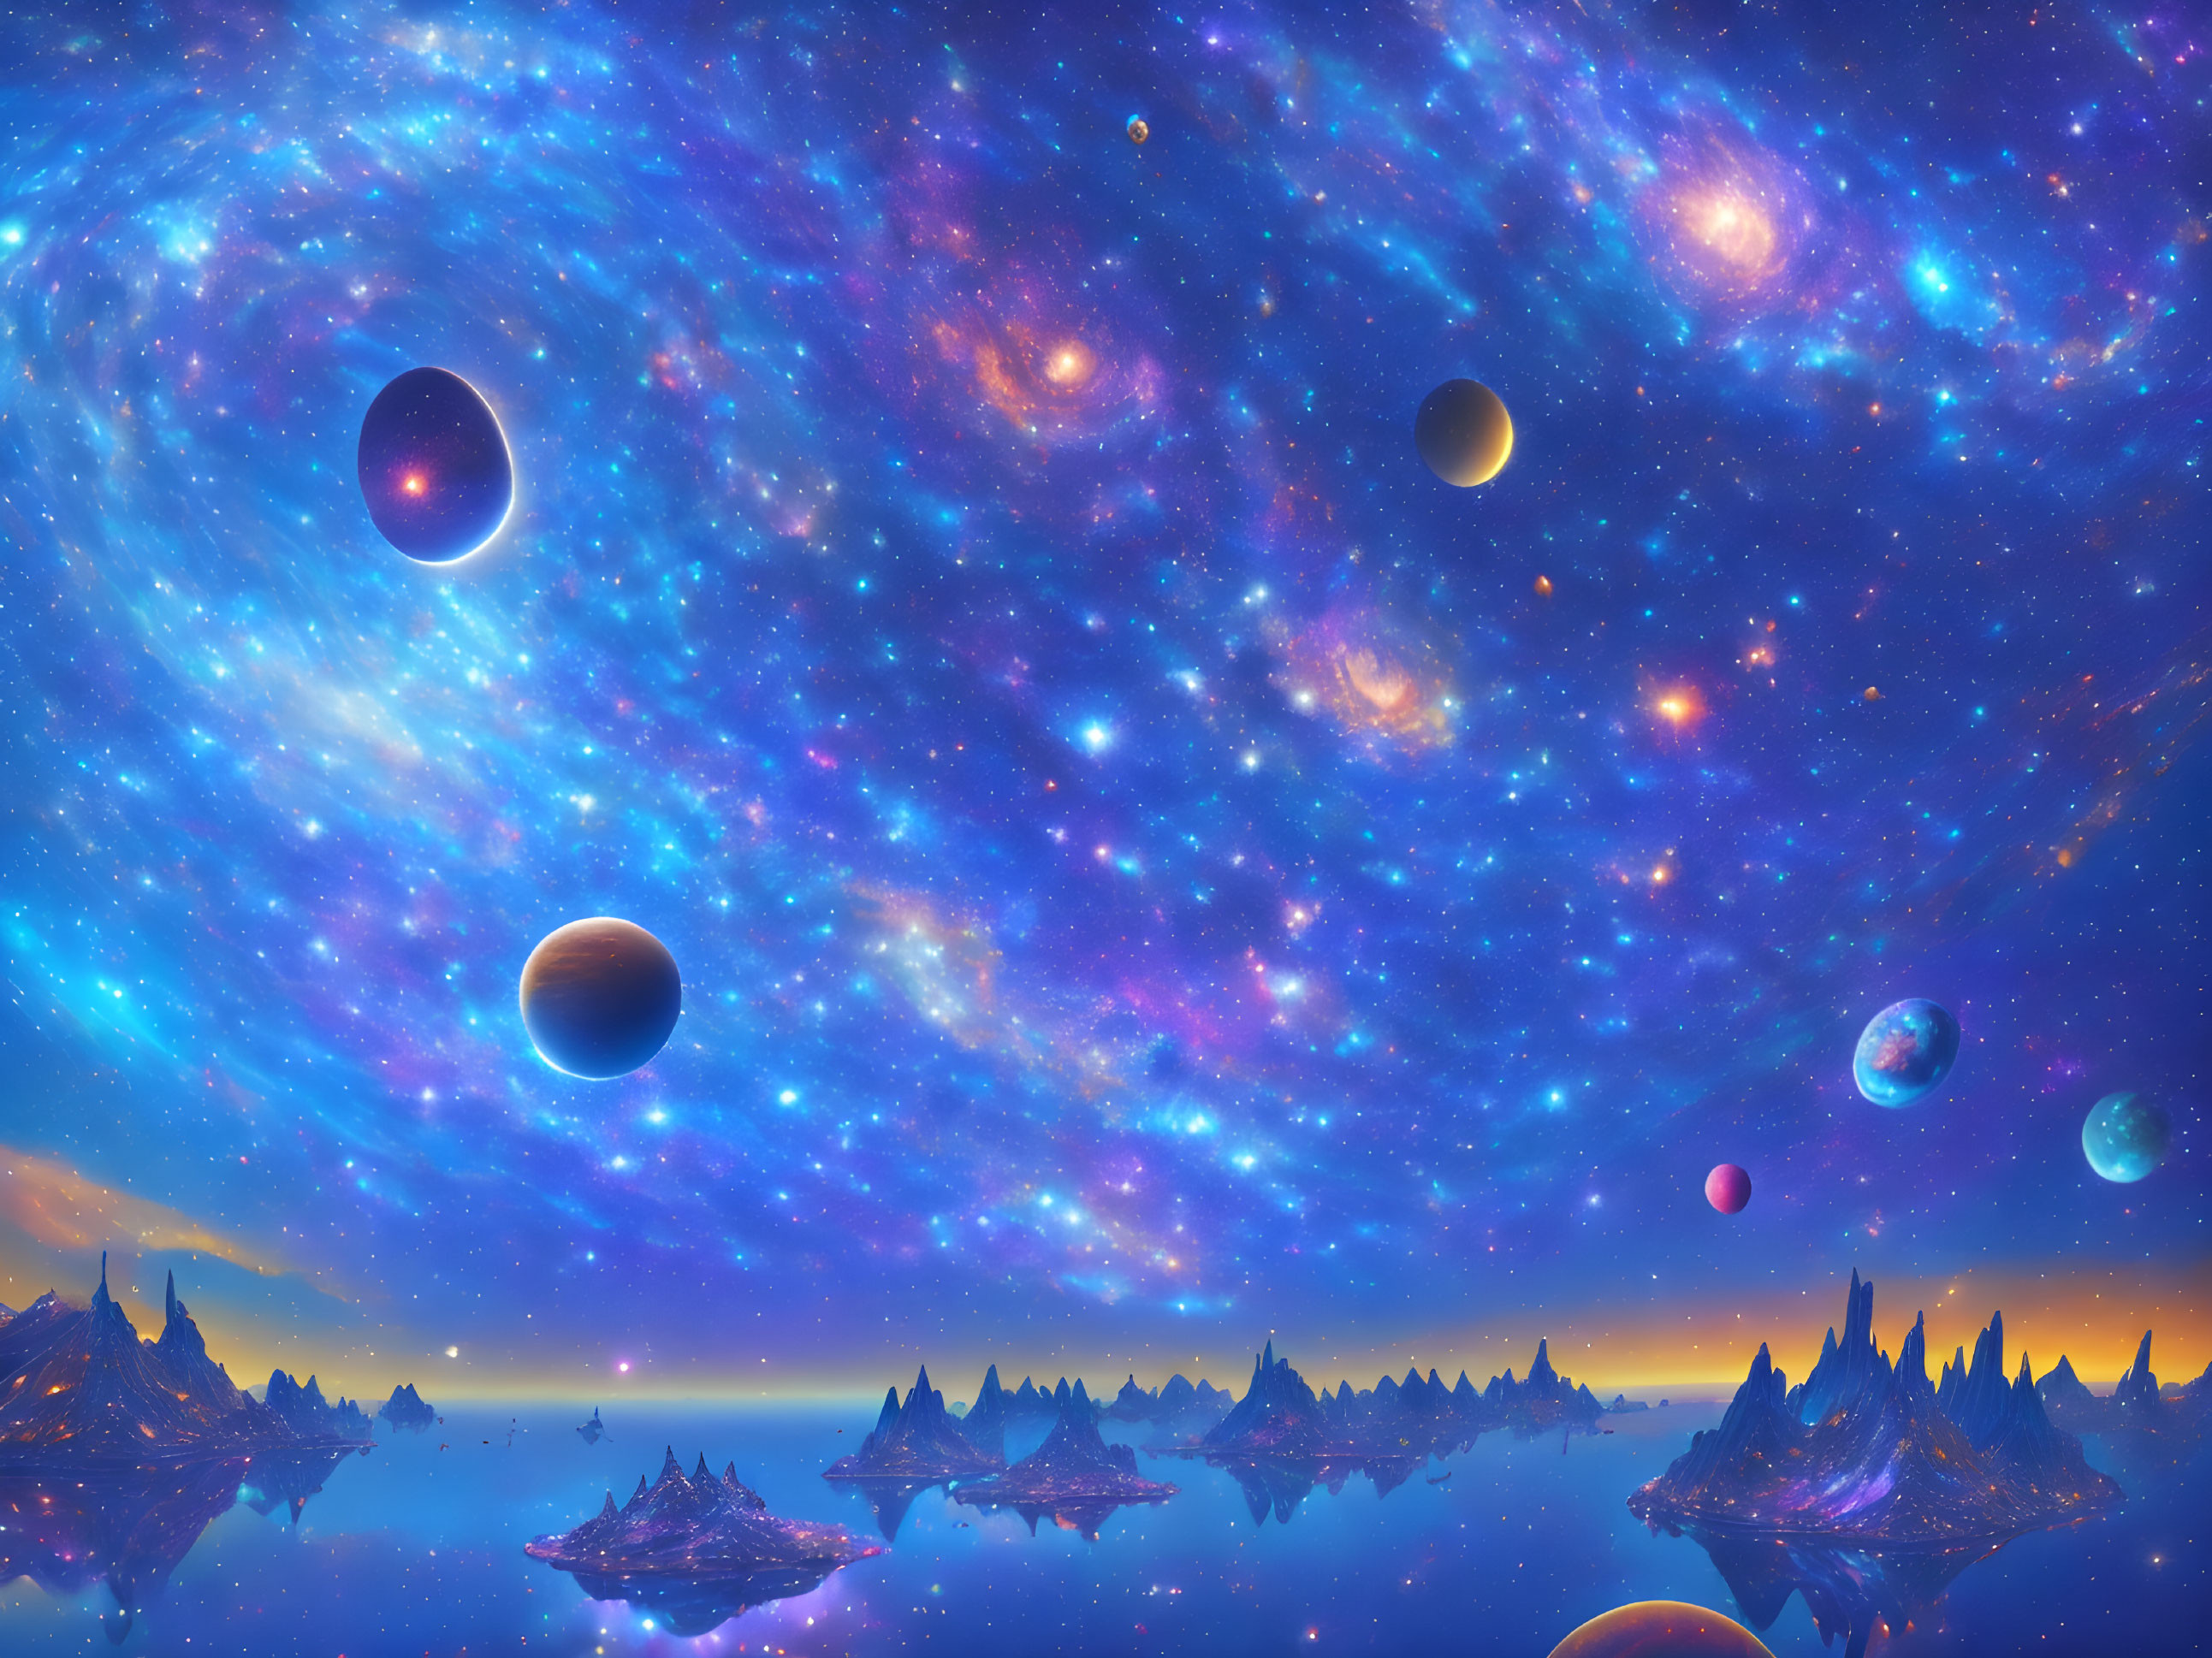 Celestial Symphony: Galactic Dreamscape